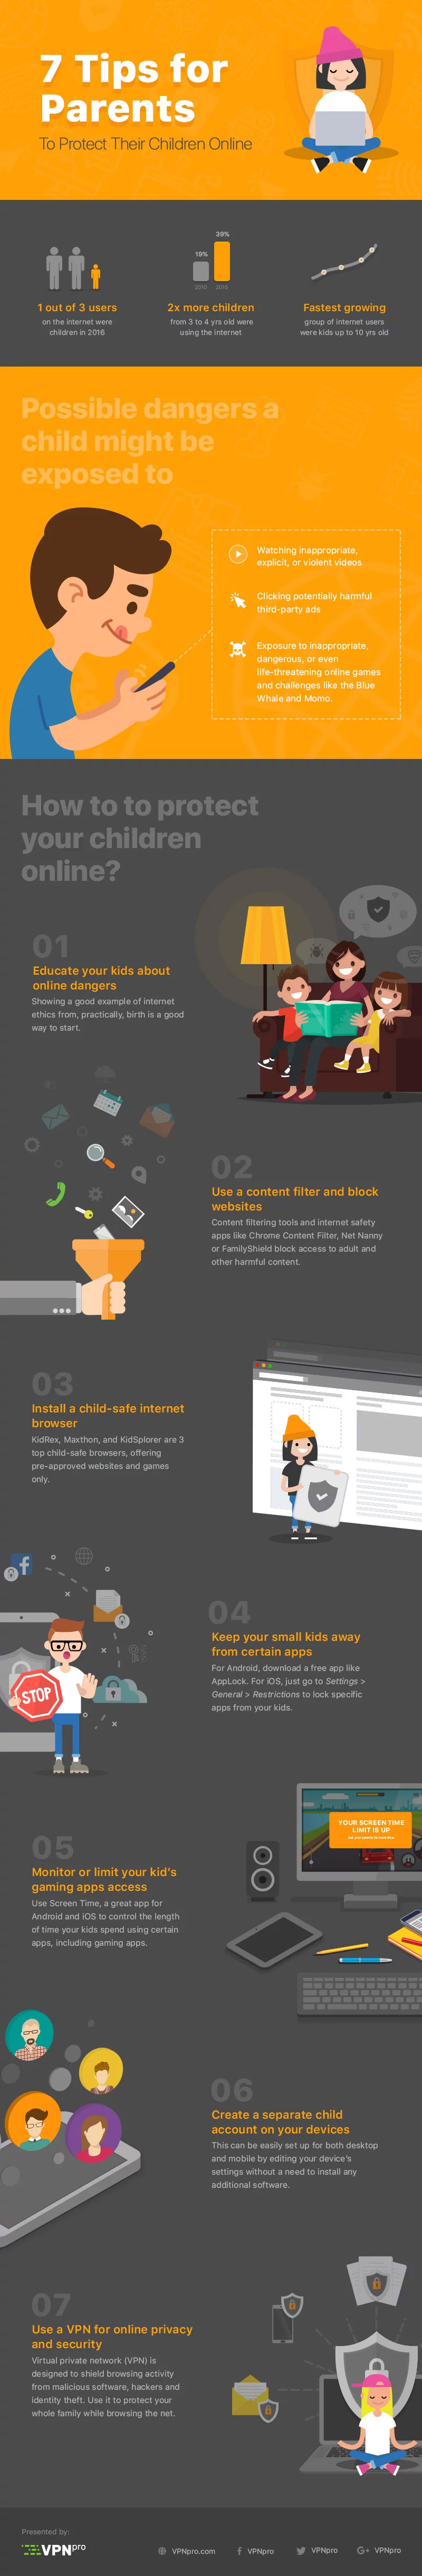 Internet Safety for Kids: 7 Tips for Parents